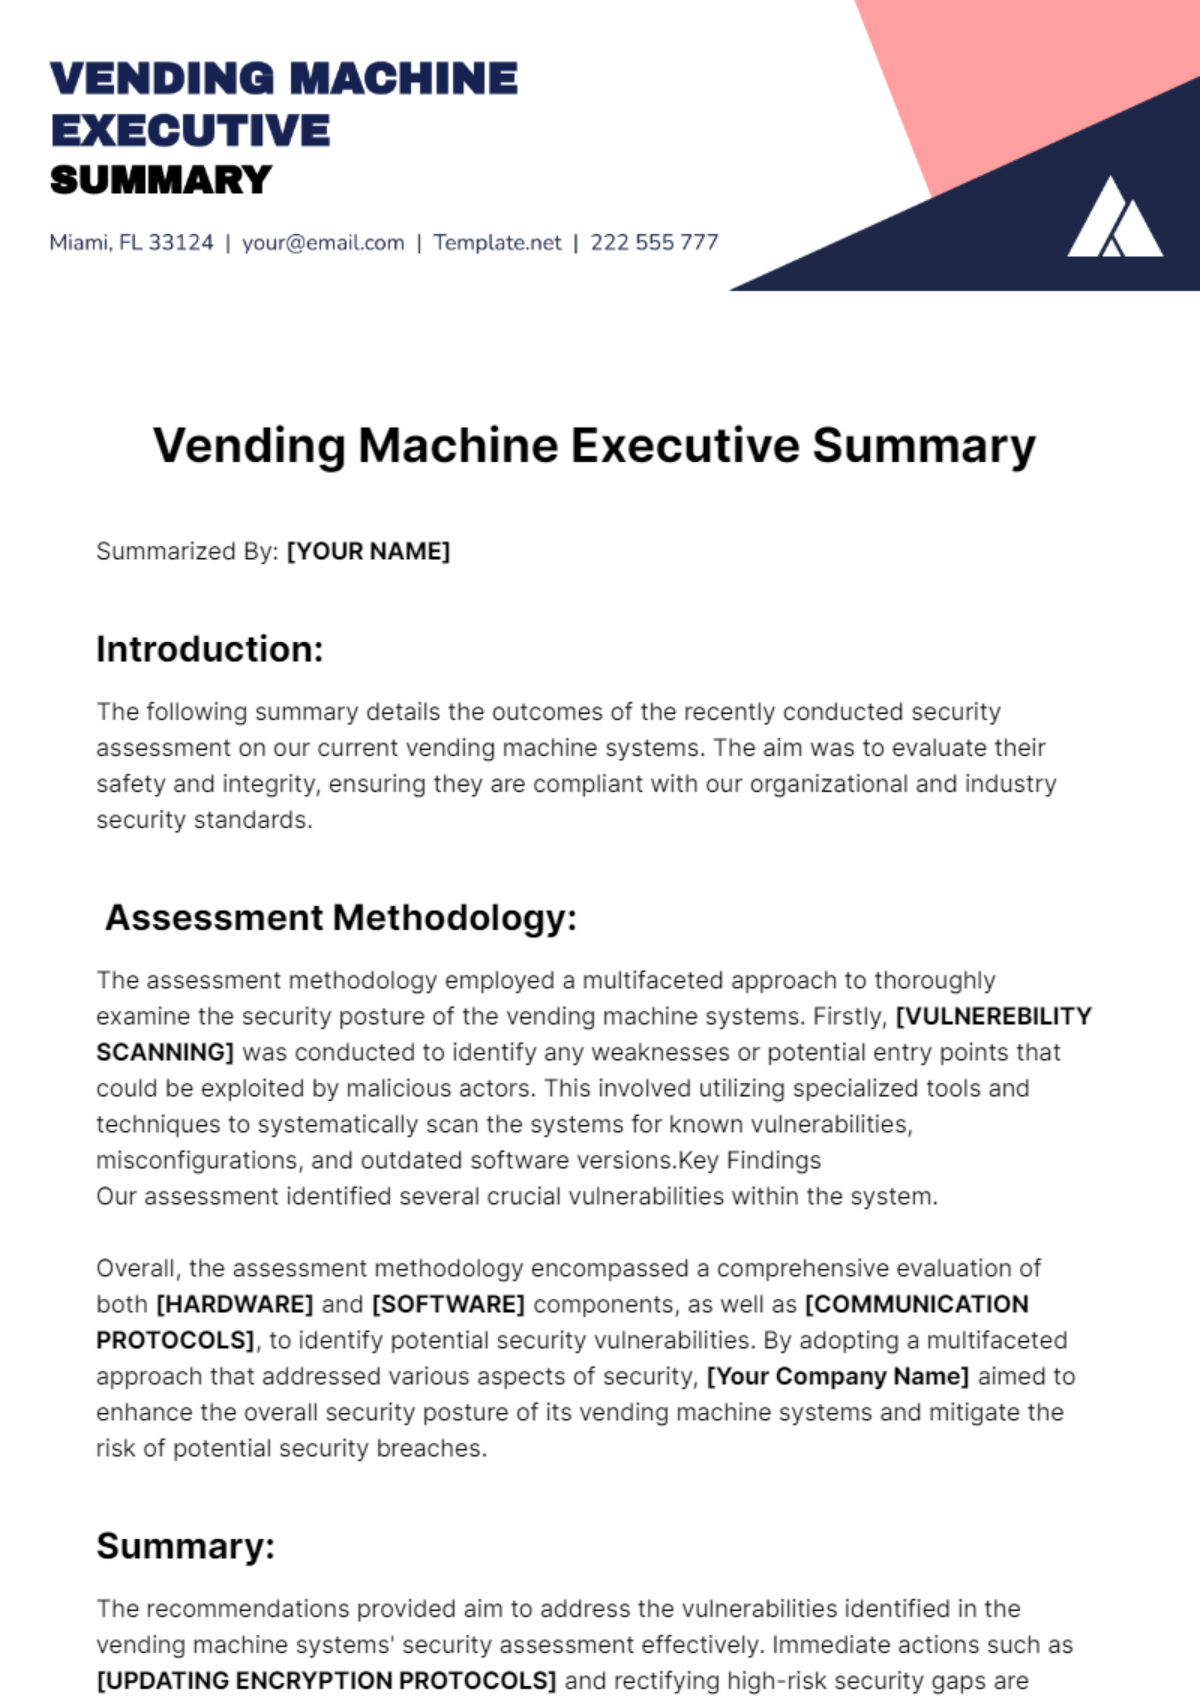 Vending Machine Executive Summary Template